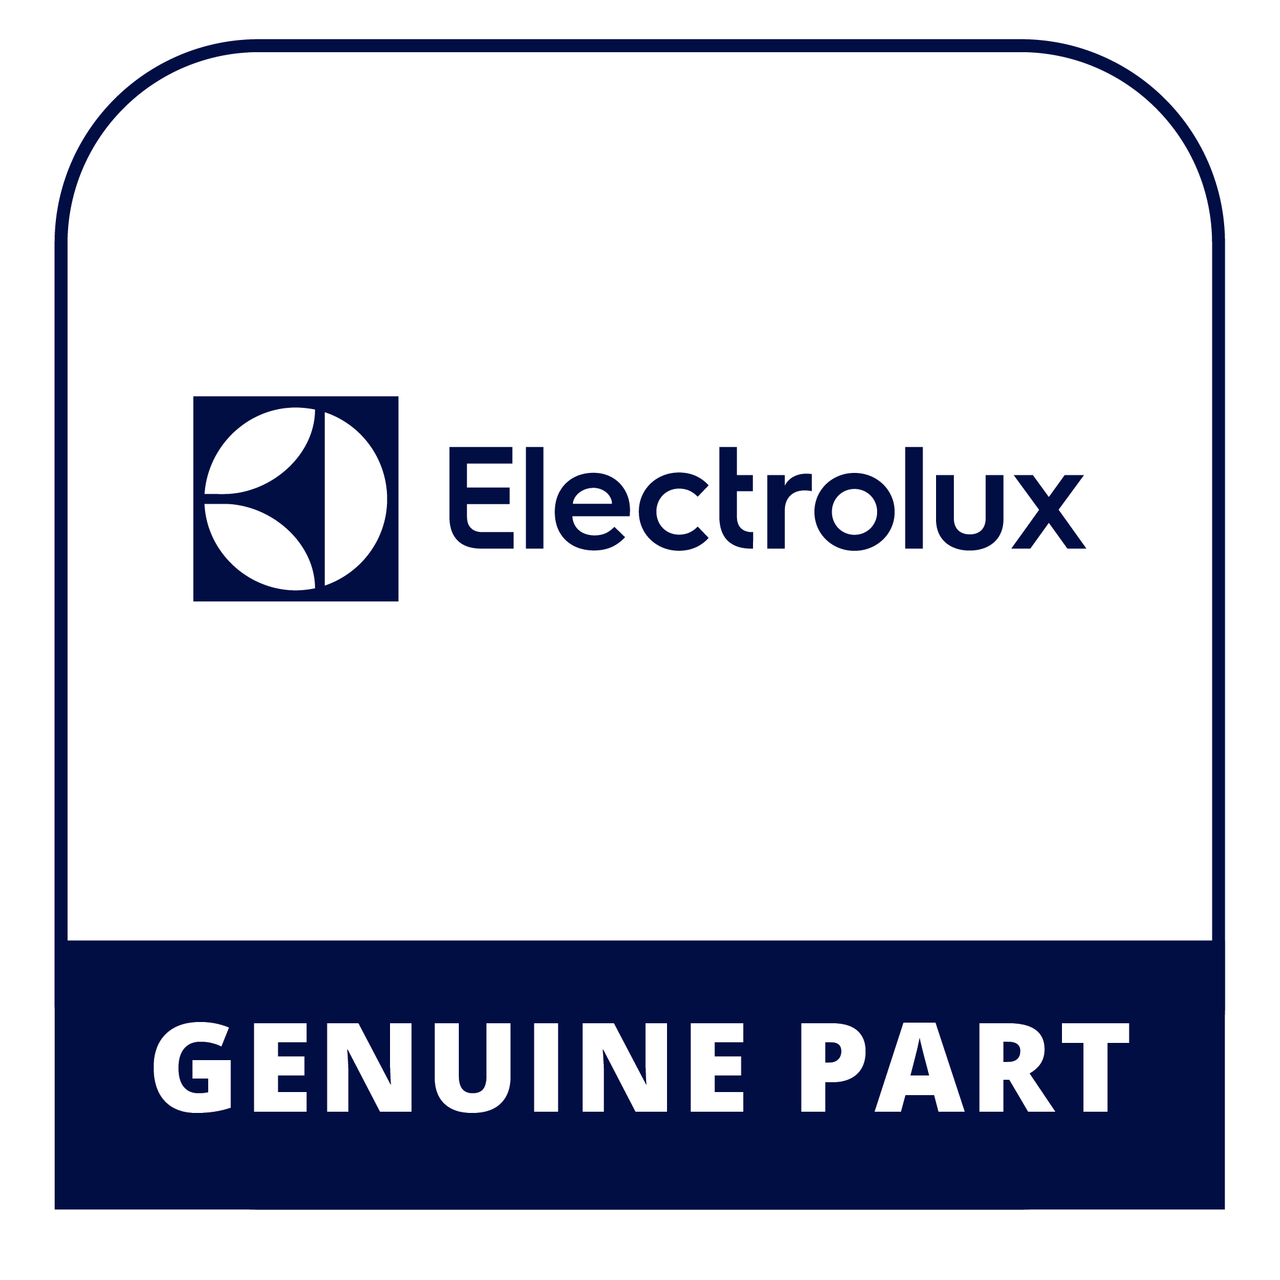 Frigidaire - Electrolux 5304445530 - Hinge Kit - Genuine Electrolux Part